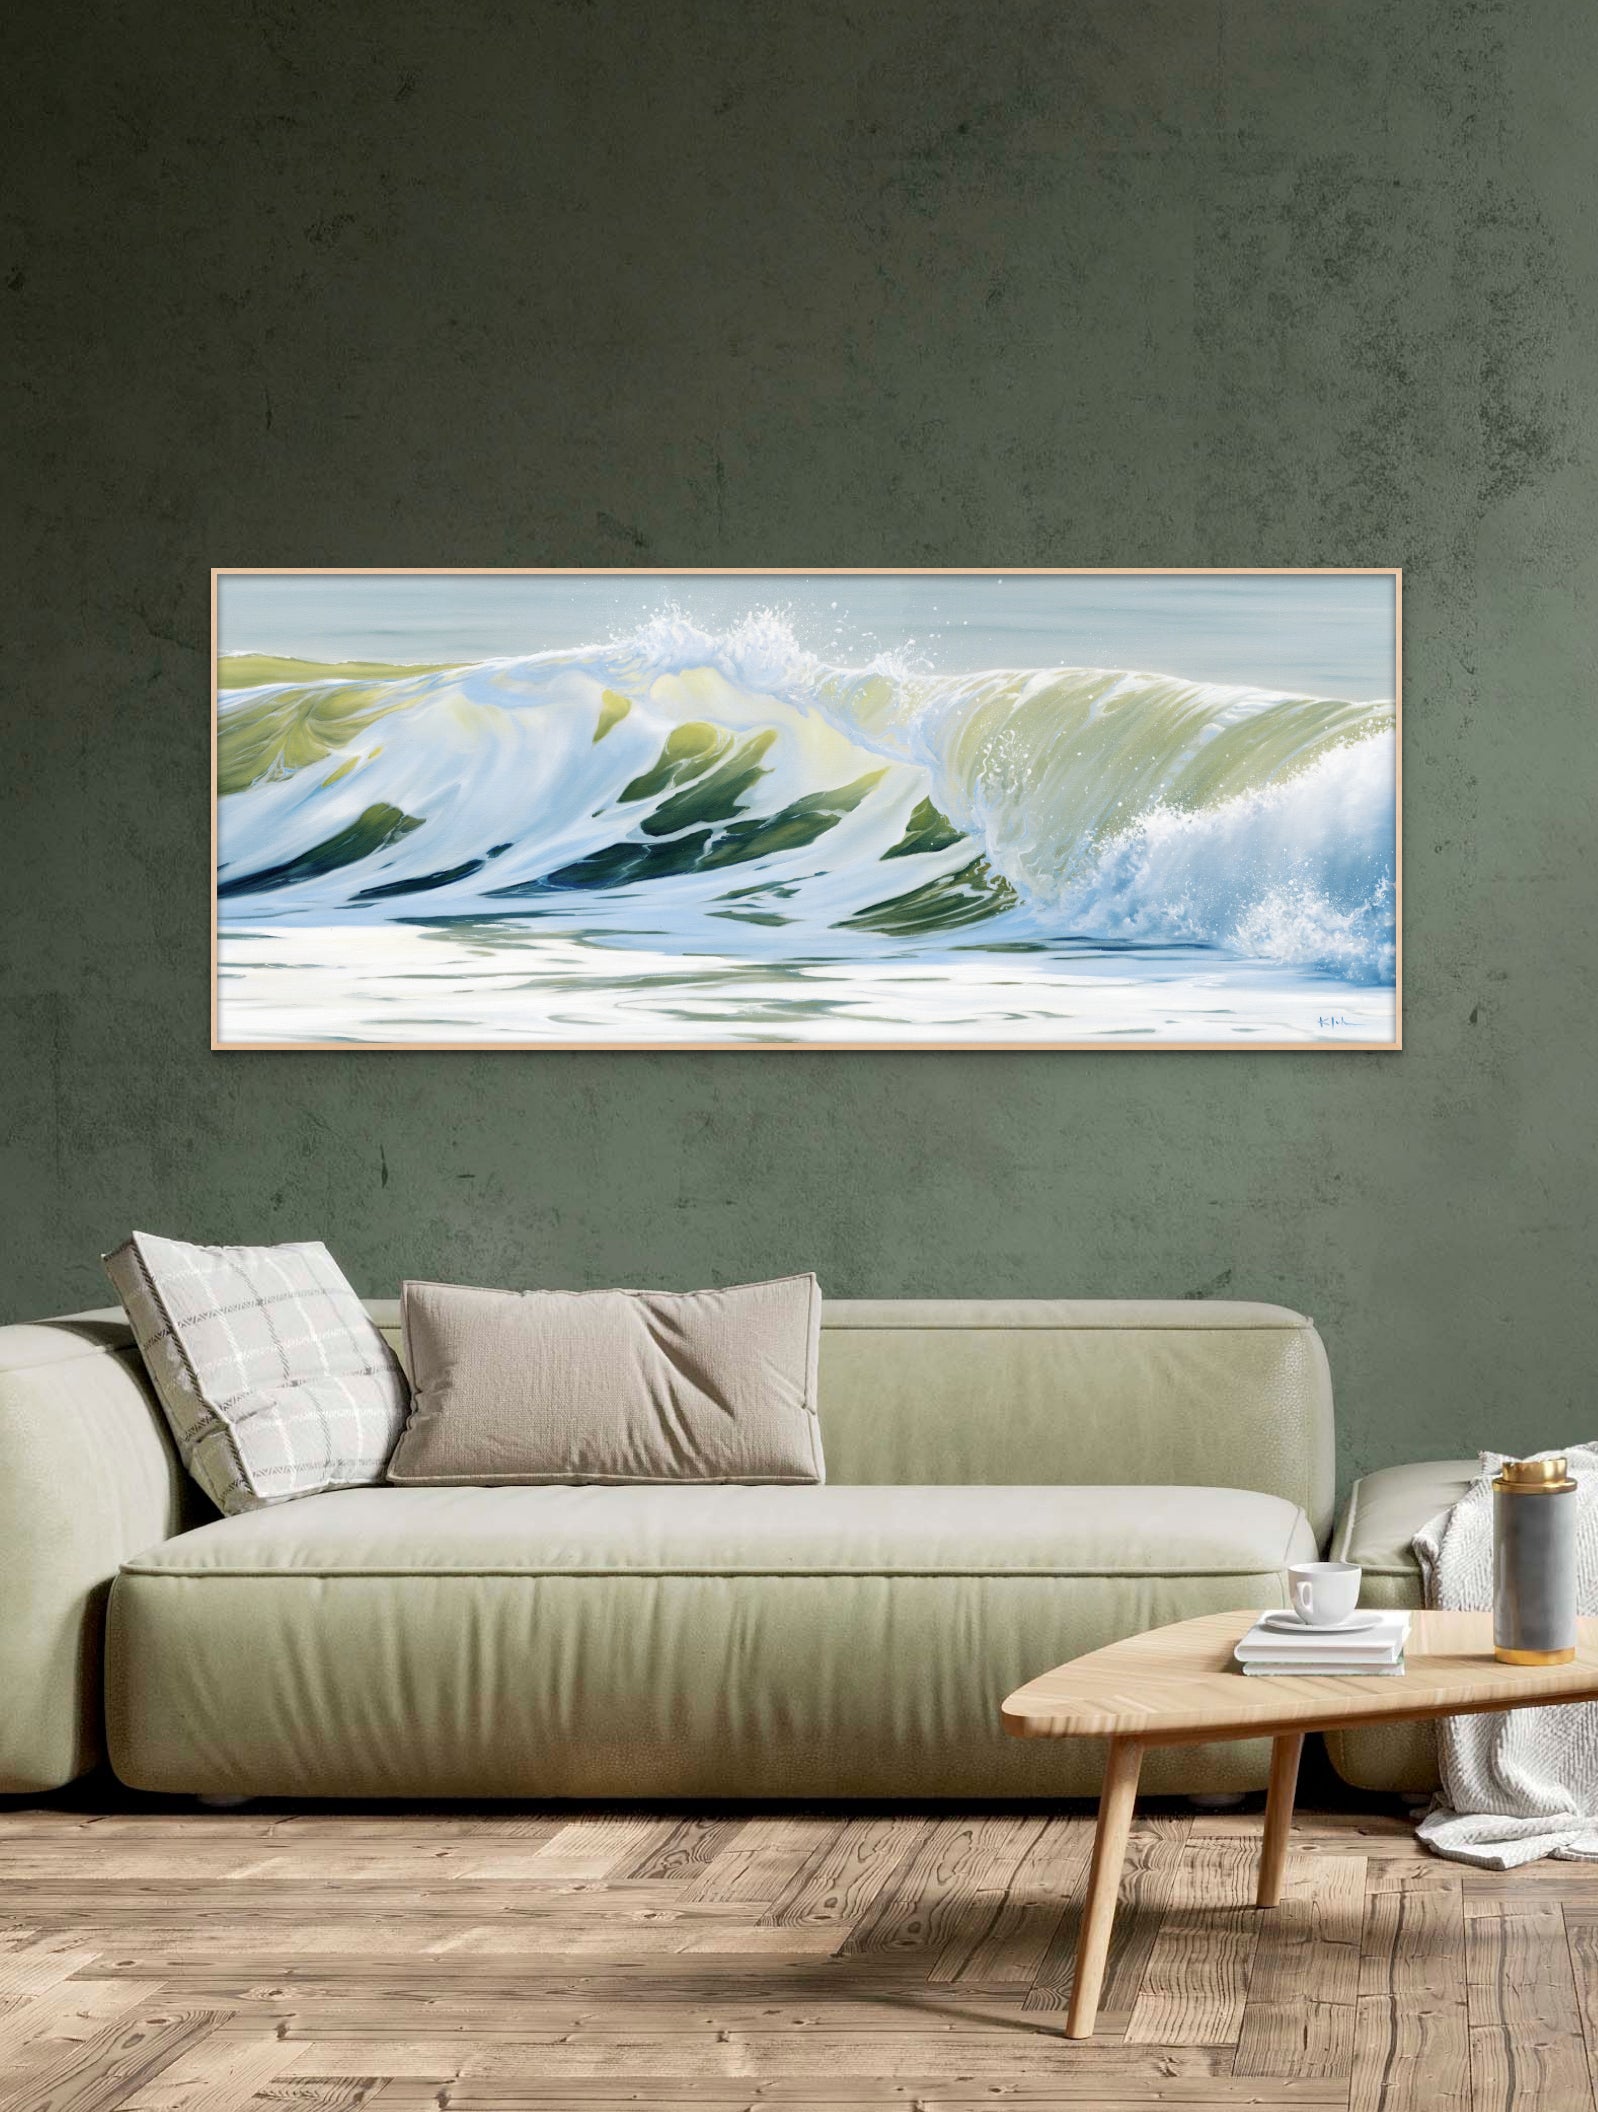 Olive Green Interiors Ocean Wave Art